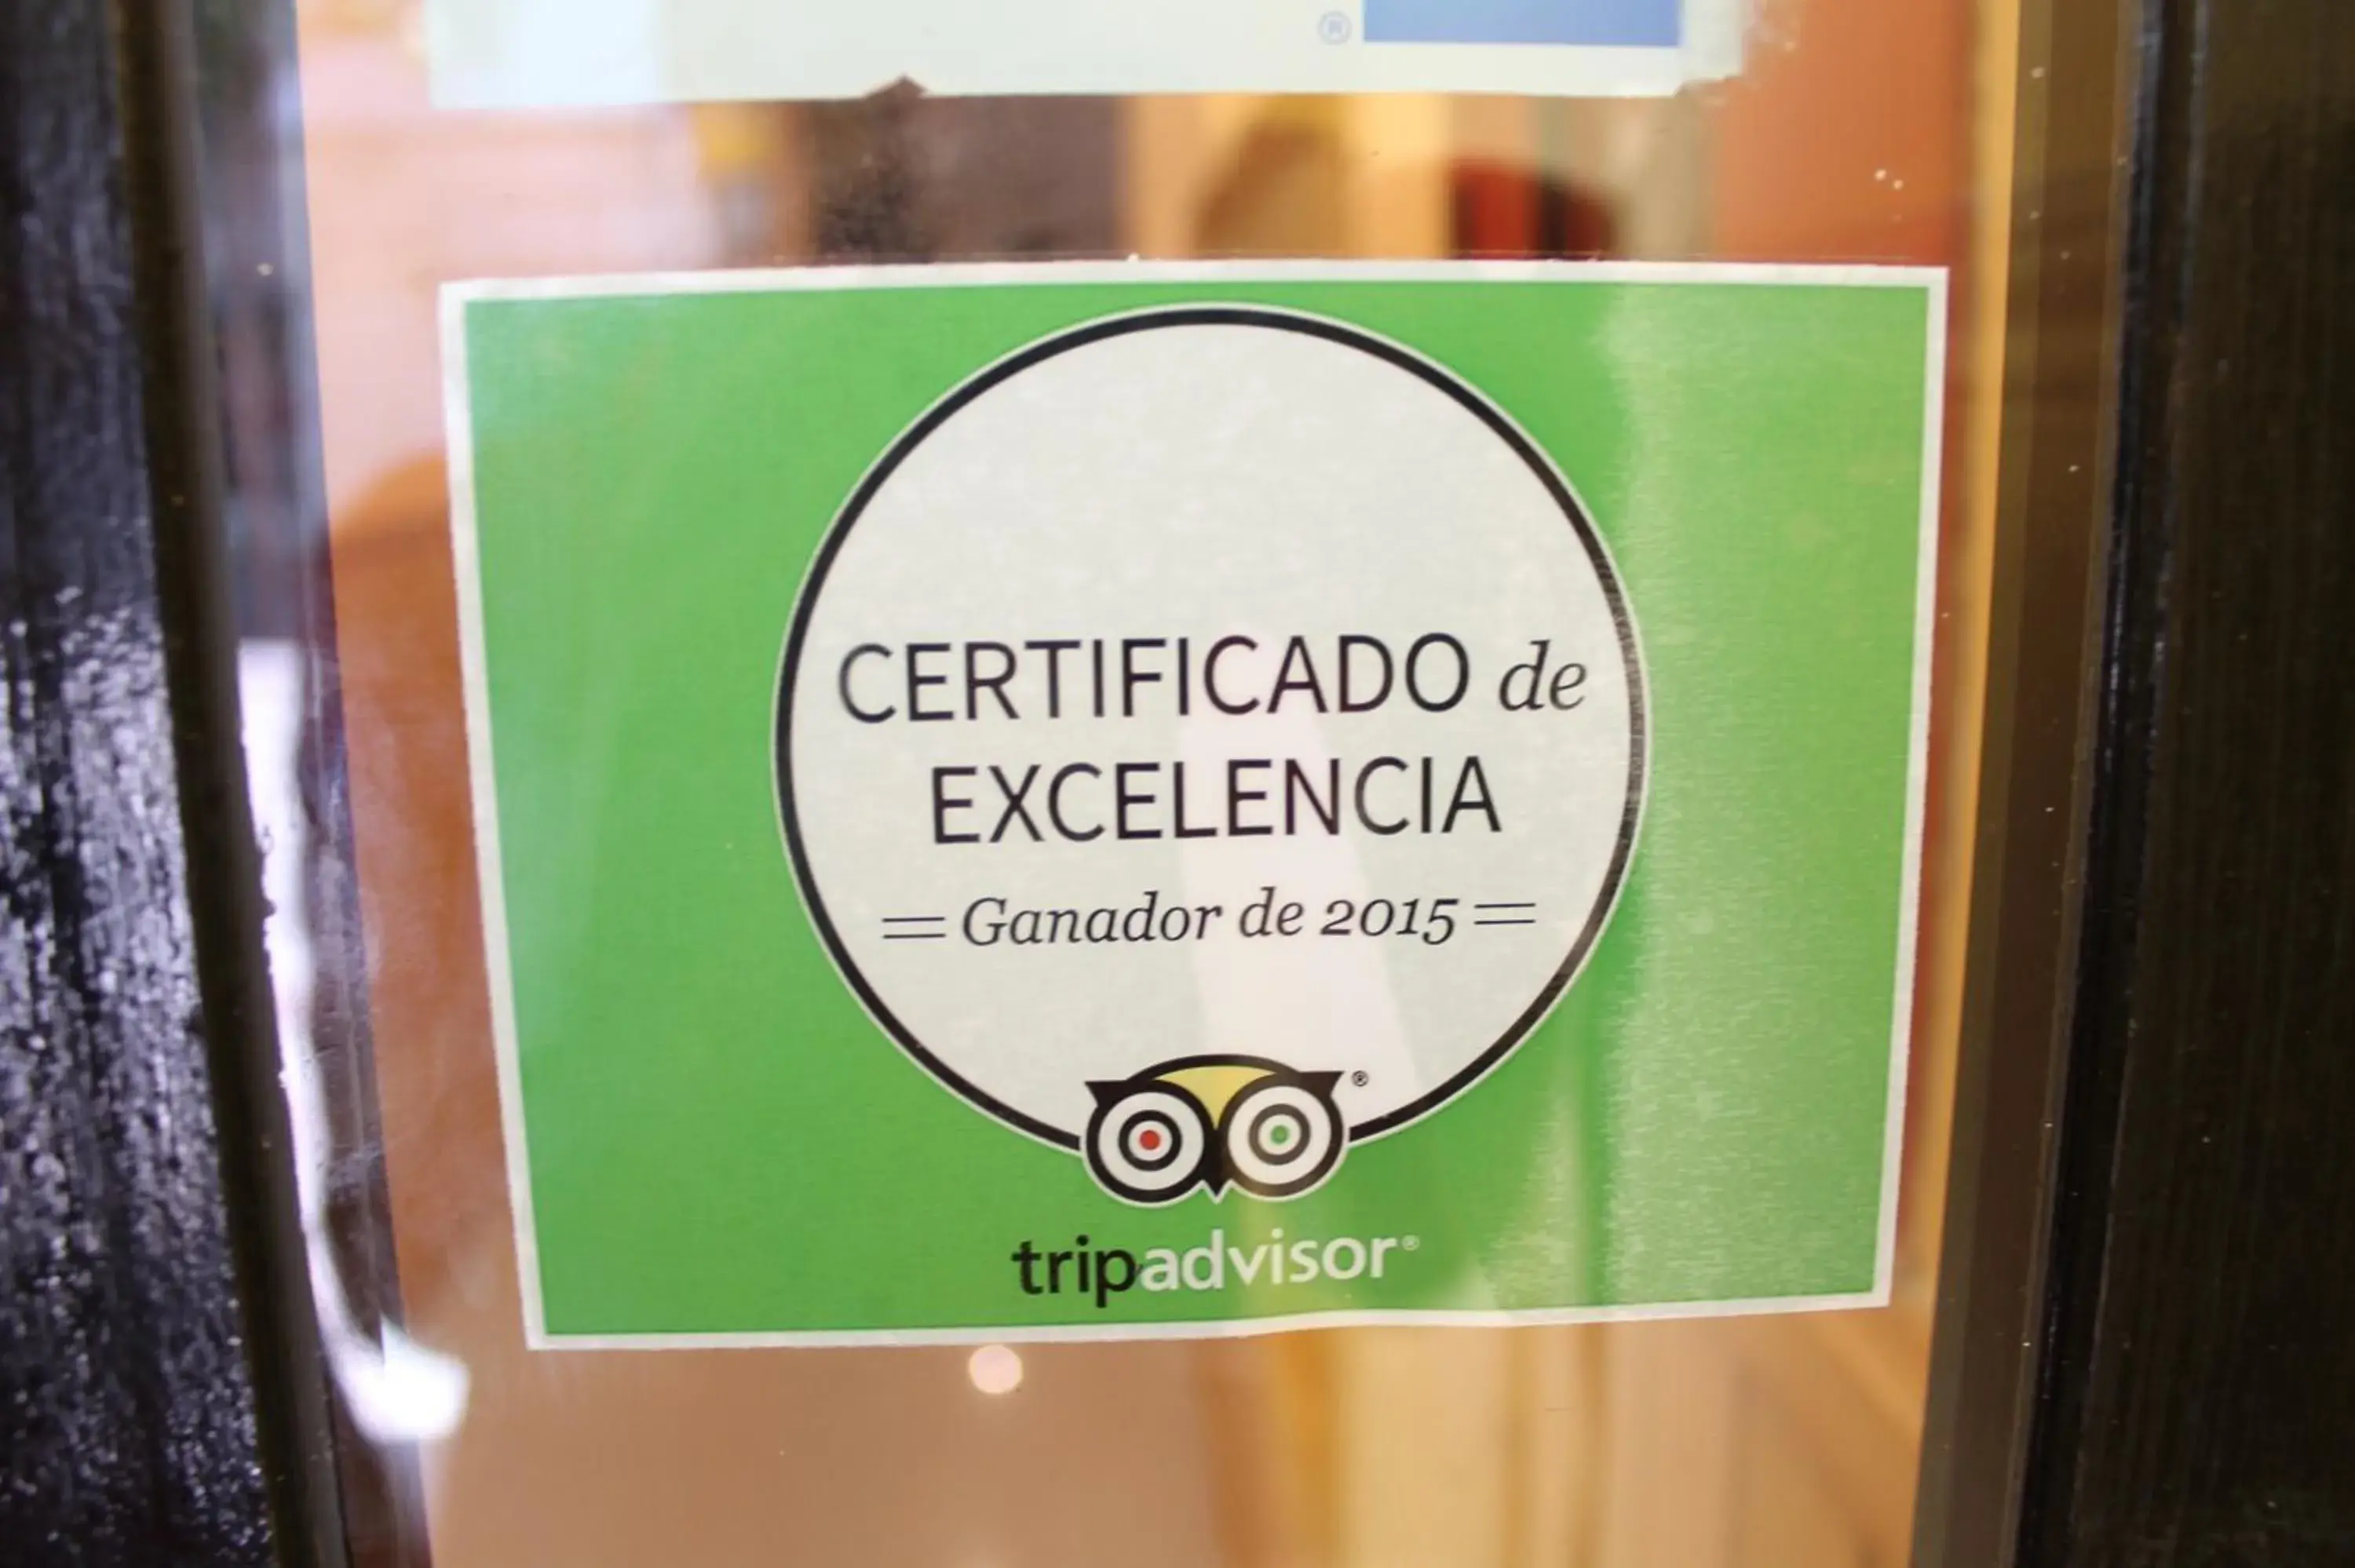 Certificate/Award in Hotel Mirador Puerta del Sol